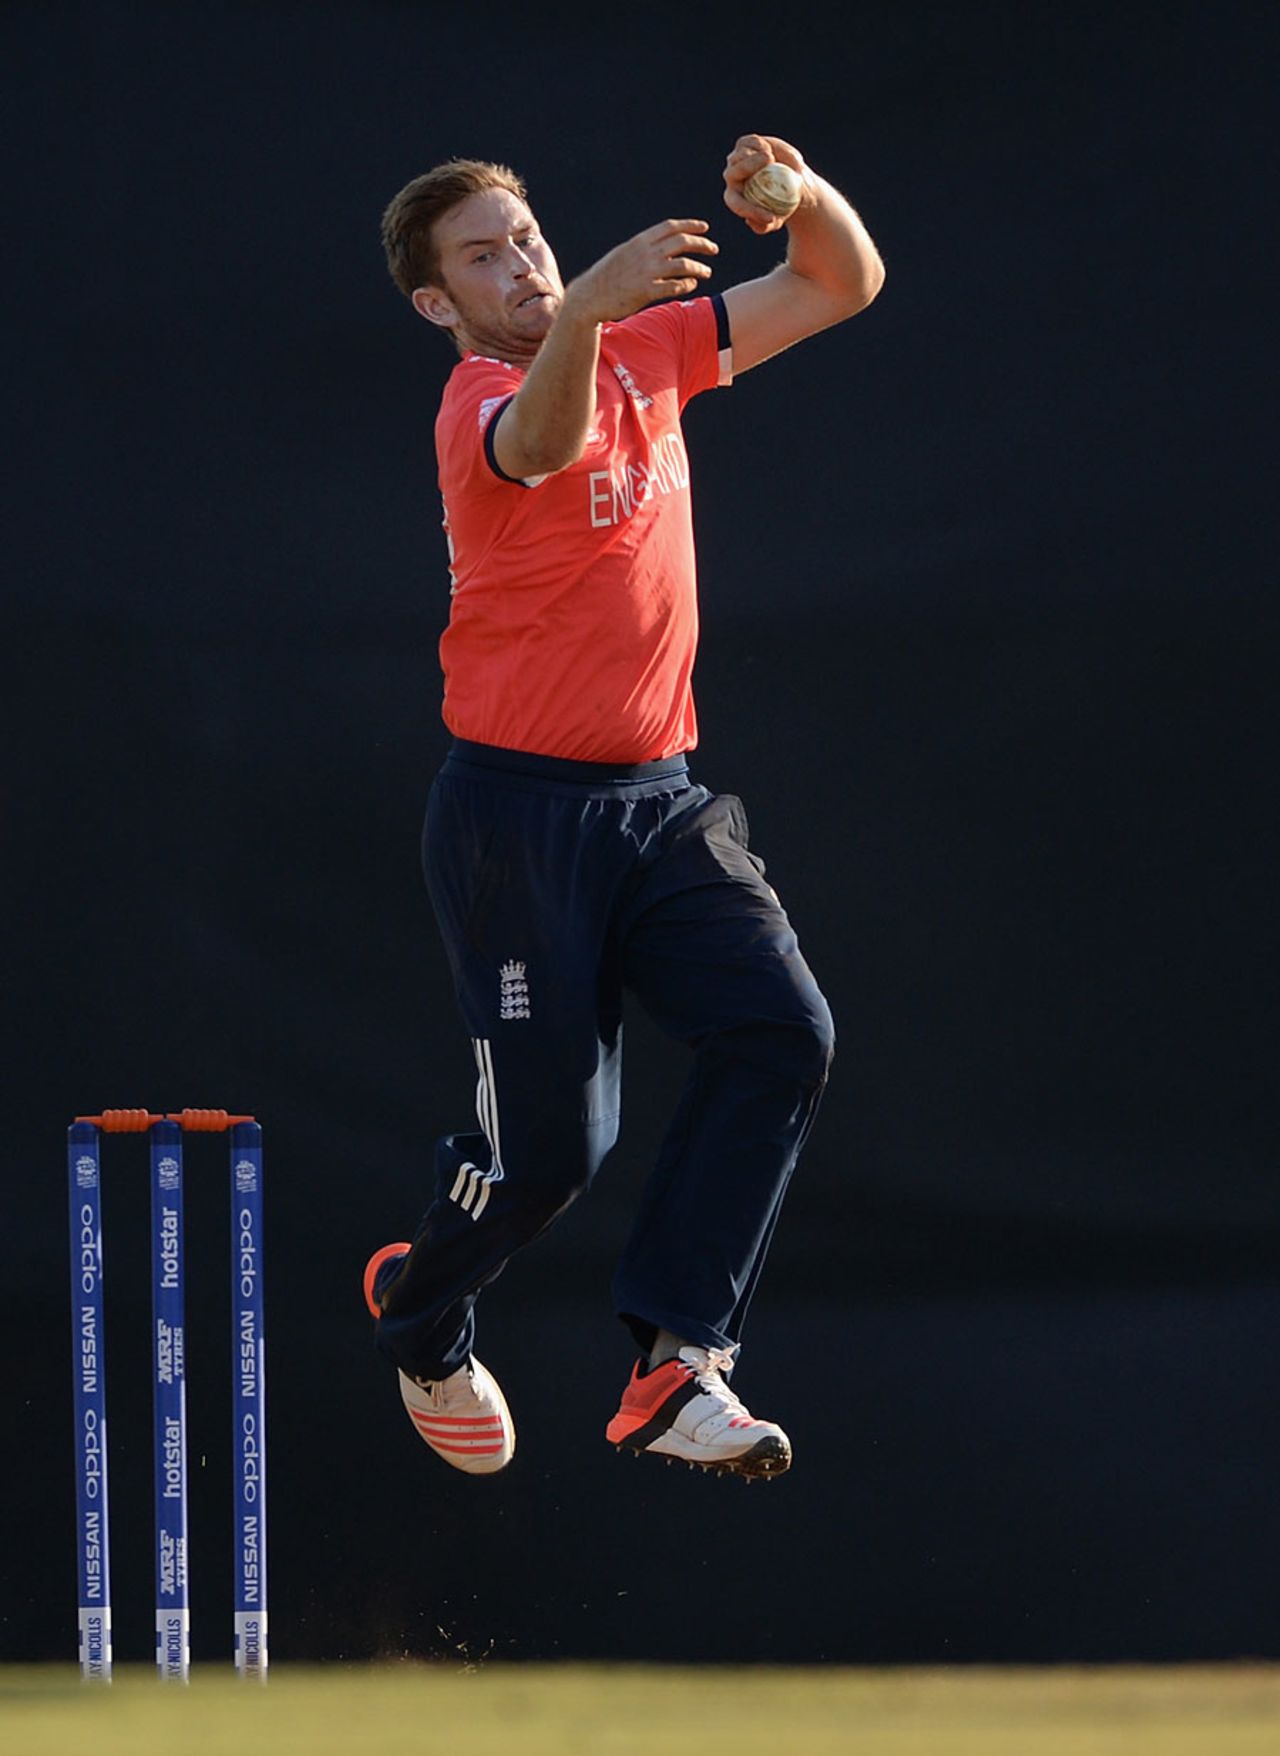 Liam Dawson gets into his delivery stride, Mumbai Cricket Association XI v England XI, World T20 warm-ups, Mumbai, March 14, 2016